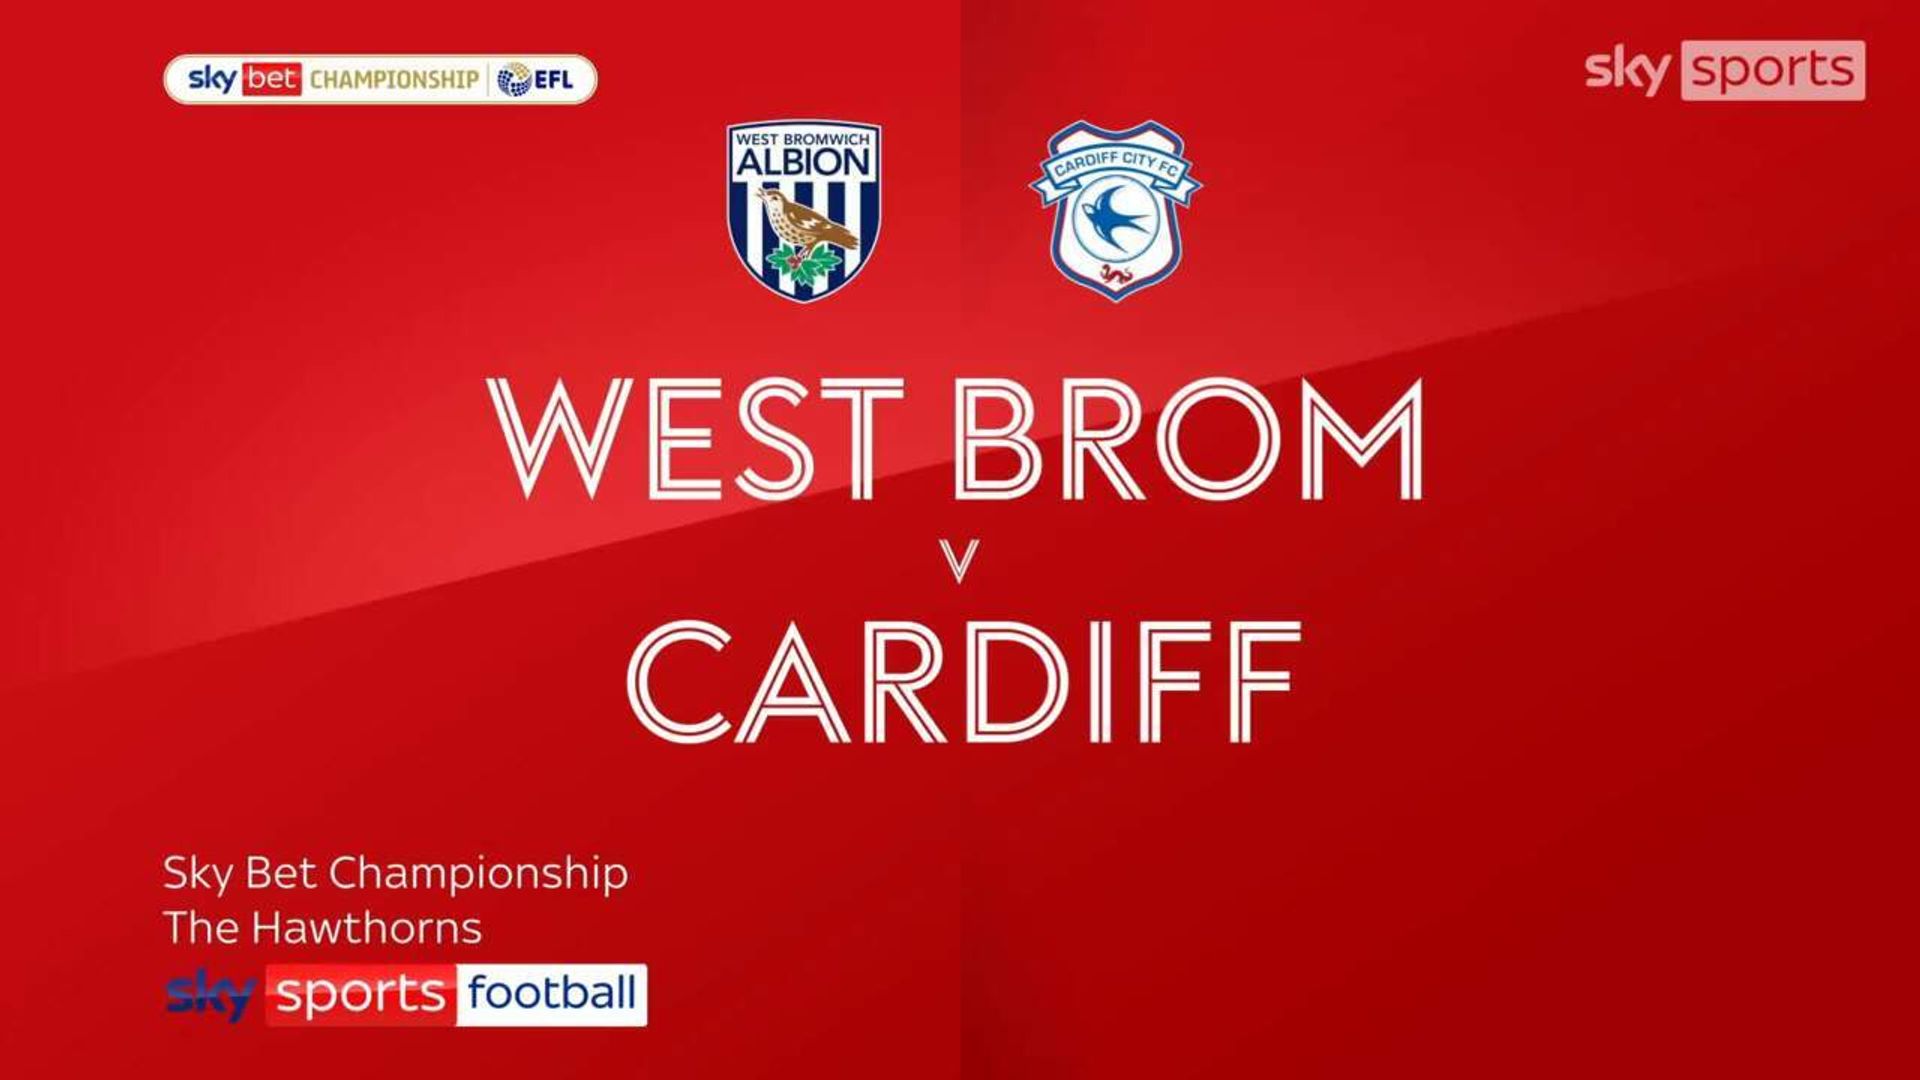 West Brom 2-0 Cardiff